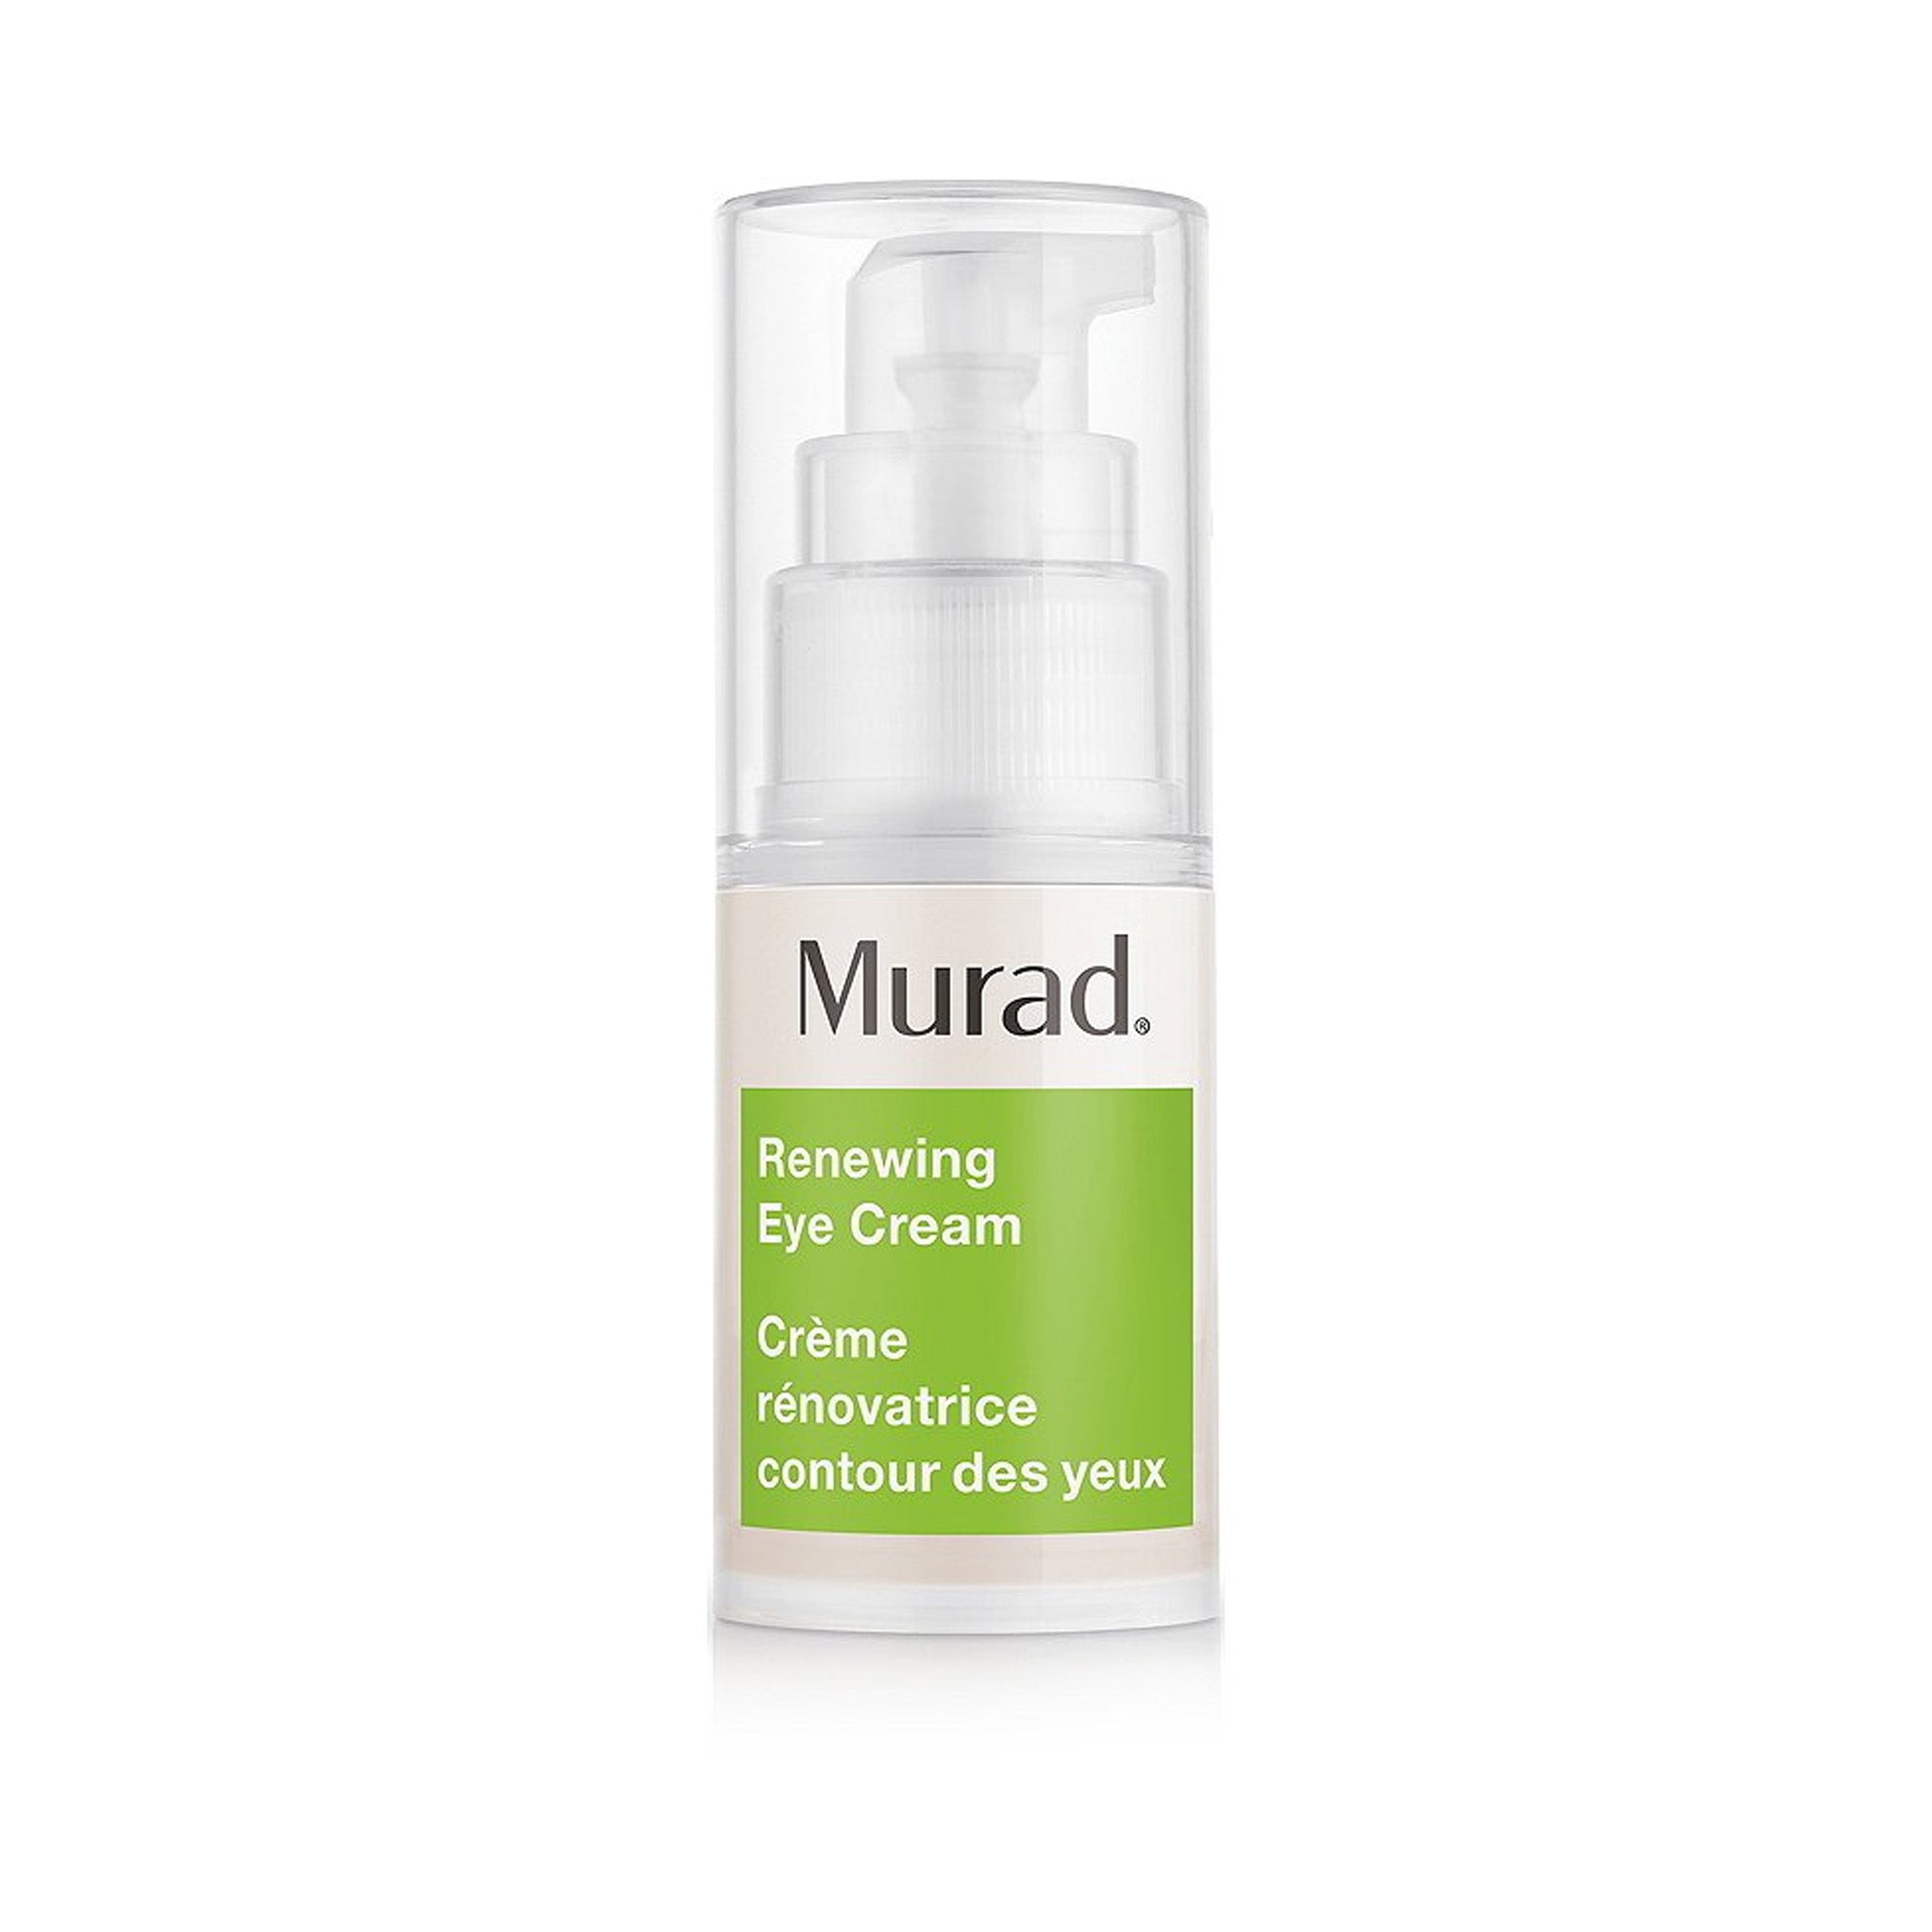 Murad Renewing Eye Cream .5oz / 15ml